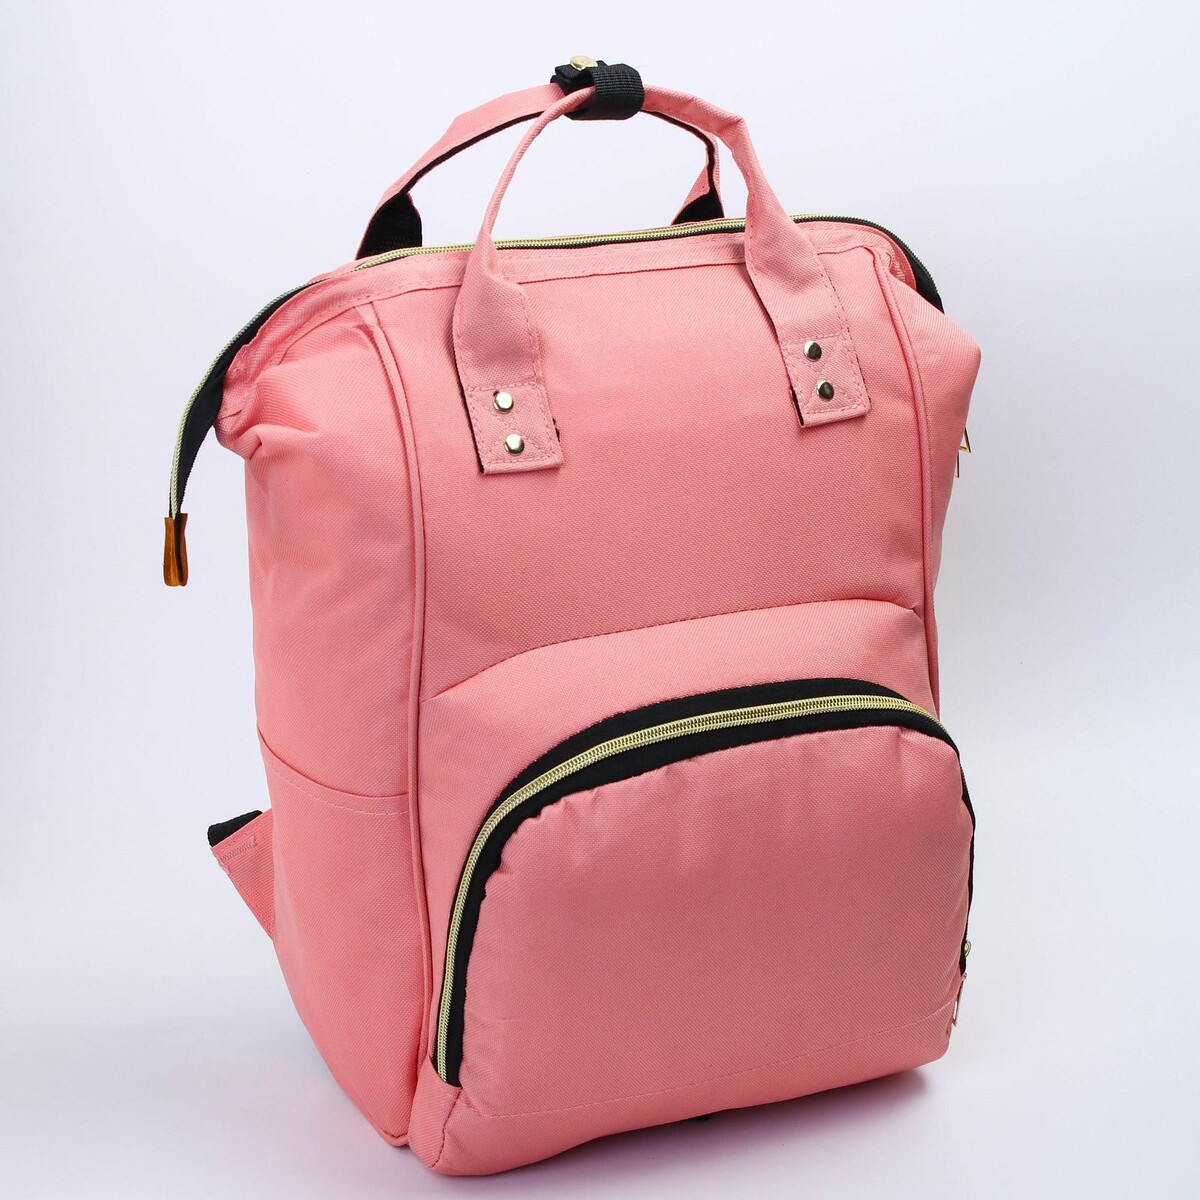 Рюкзак женский с термокарманом, термосумка - портфель, цвет розовый рюкзак женский с термокарманом термосумка портфель синий